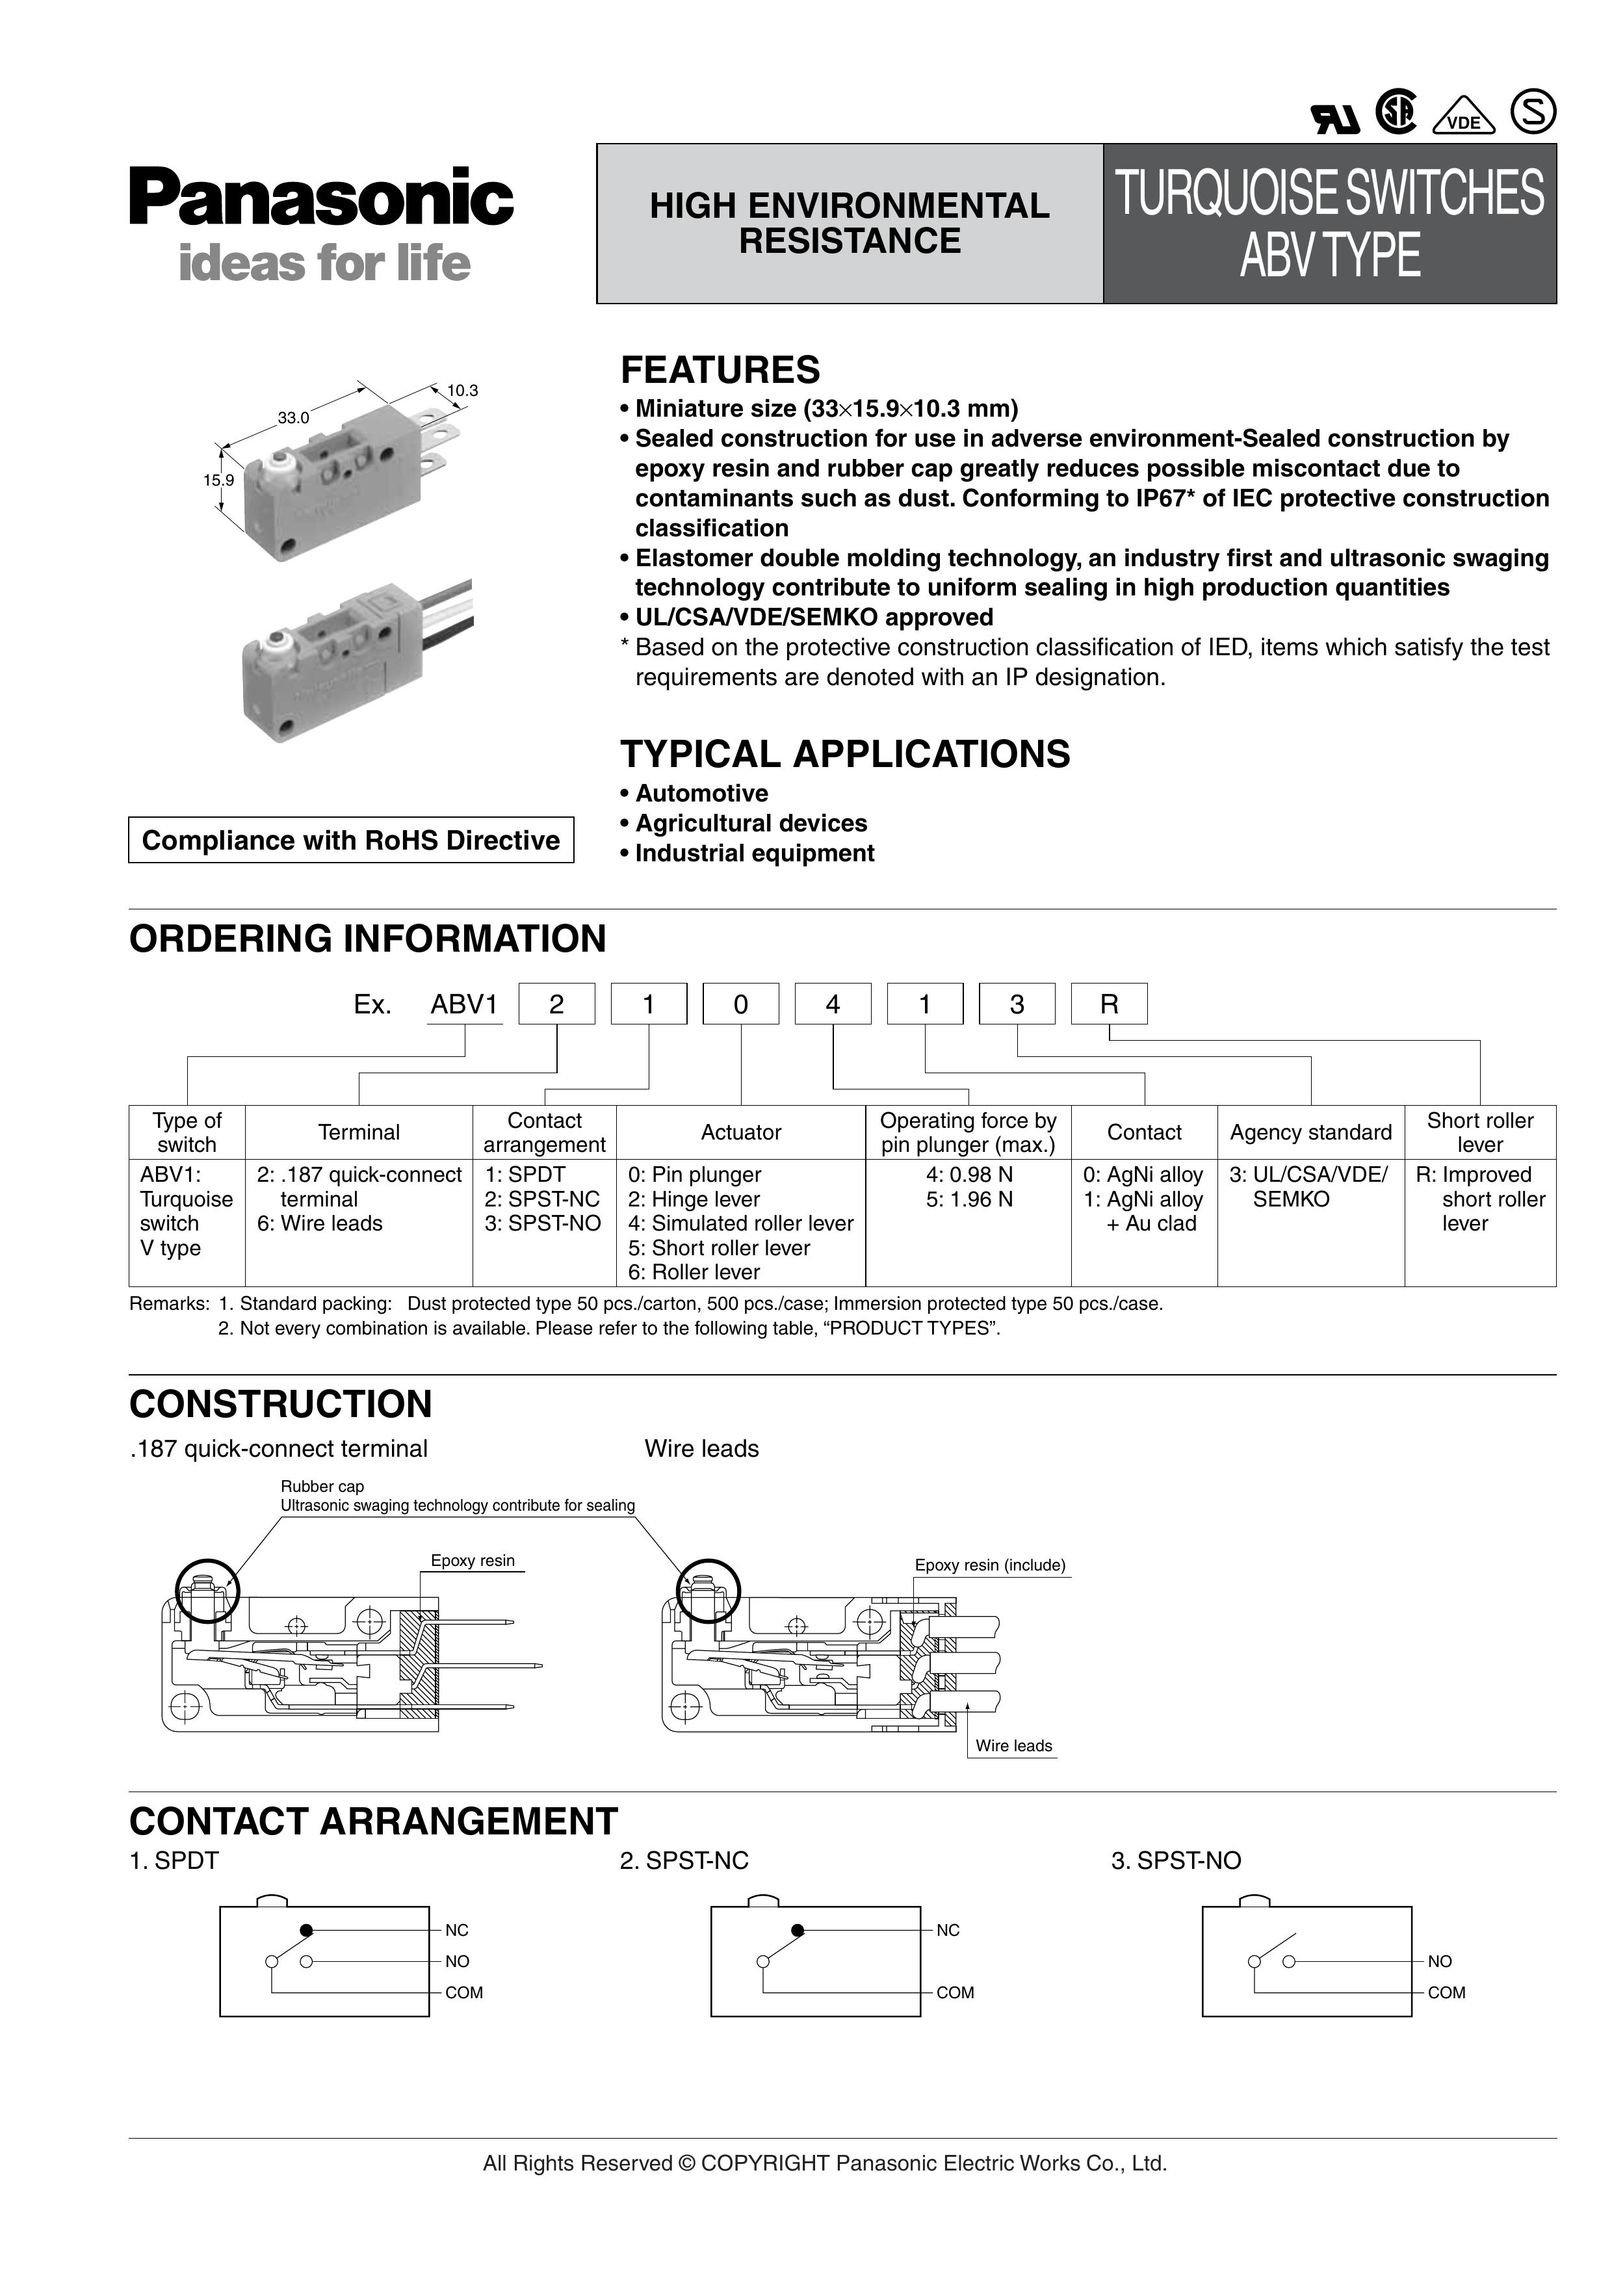 Panasonic ABV Switch User Manual